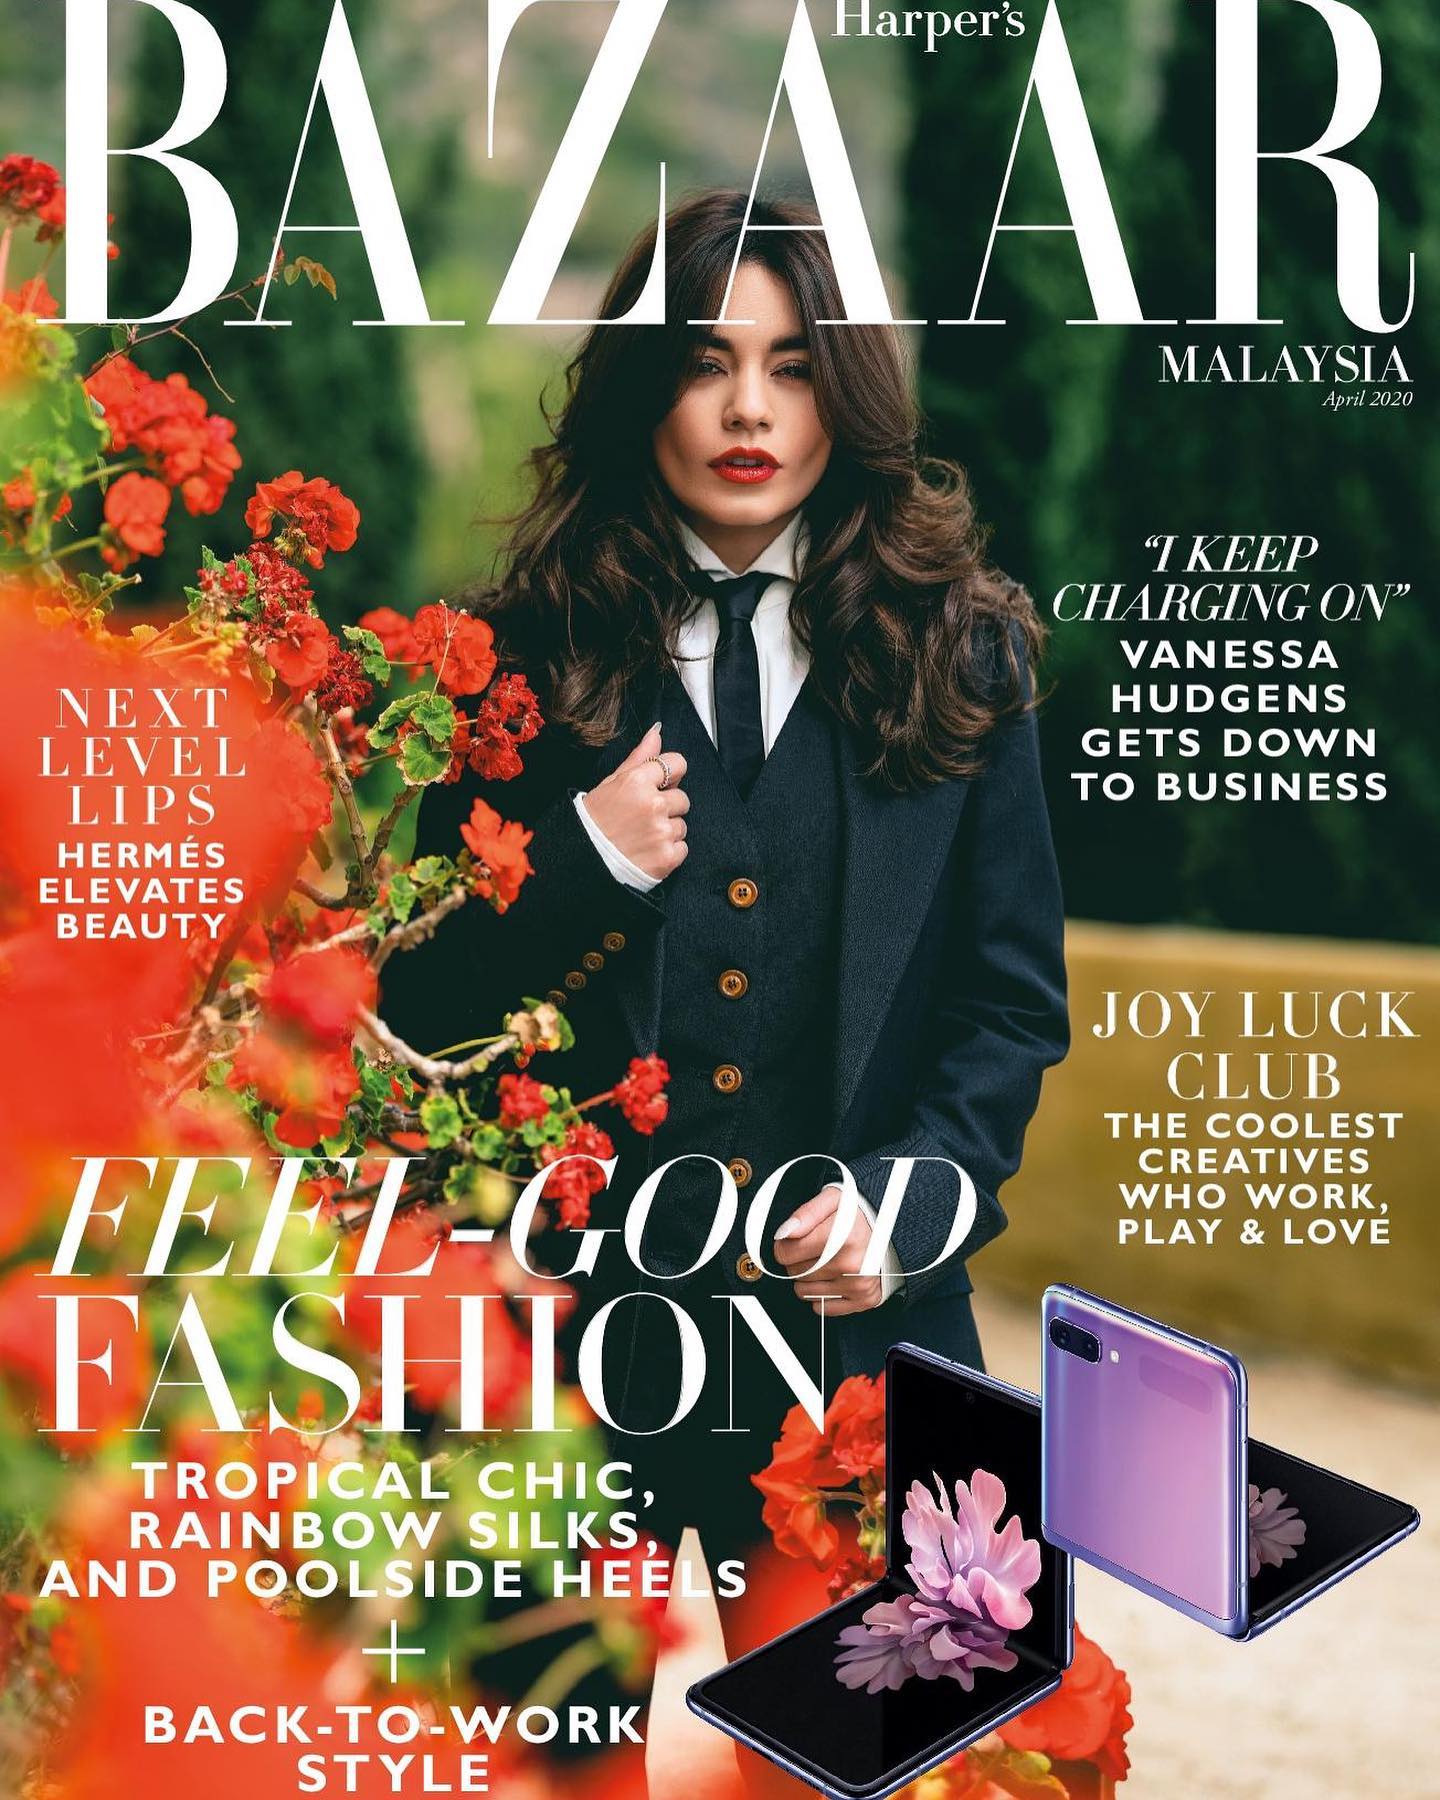 Vanessa Hudgens â€“ Harperâ€™s Bazaar (Malaysia â€“ April 2020 issue)